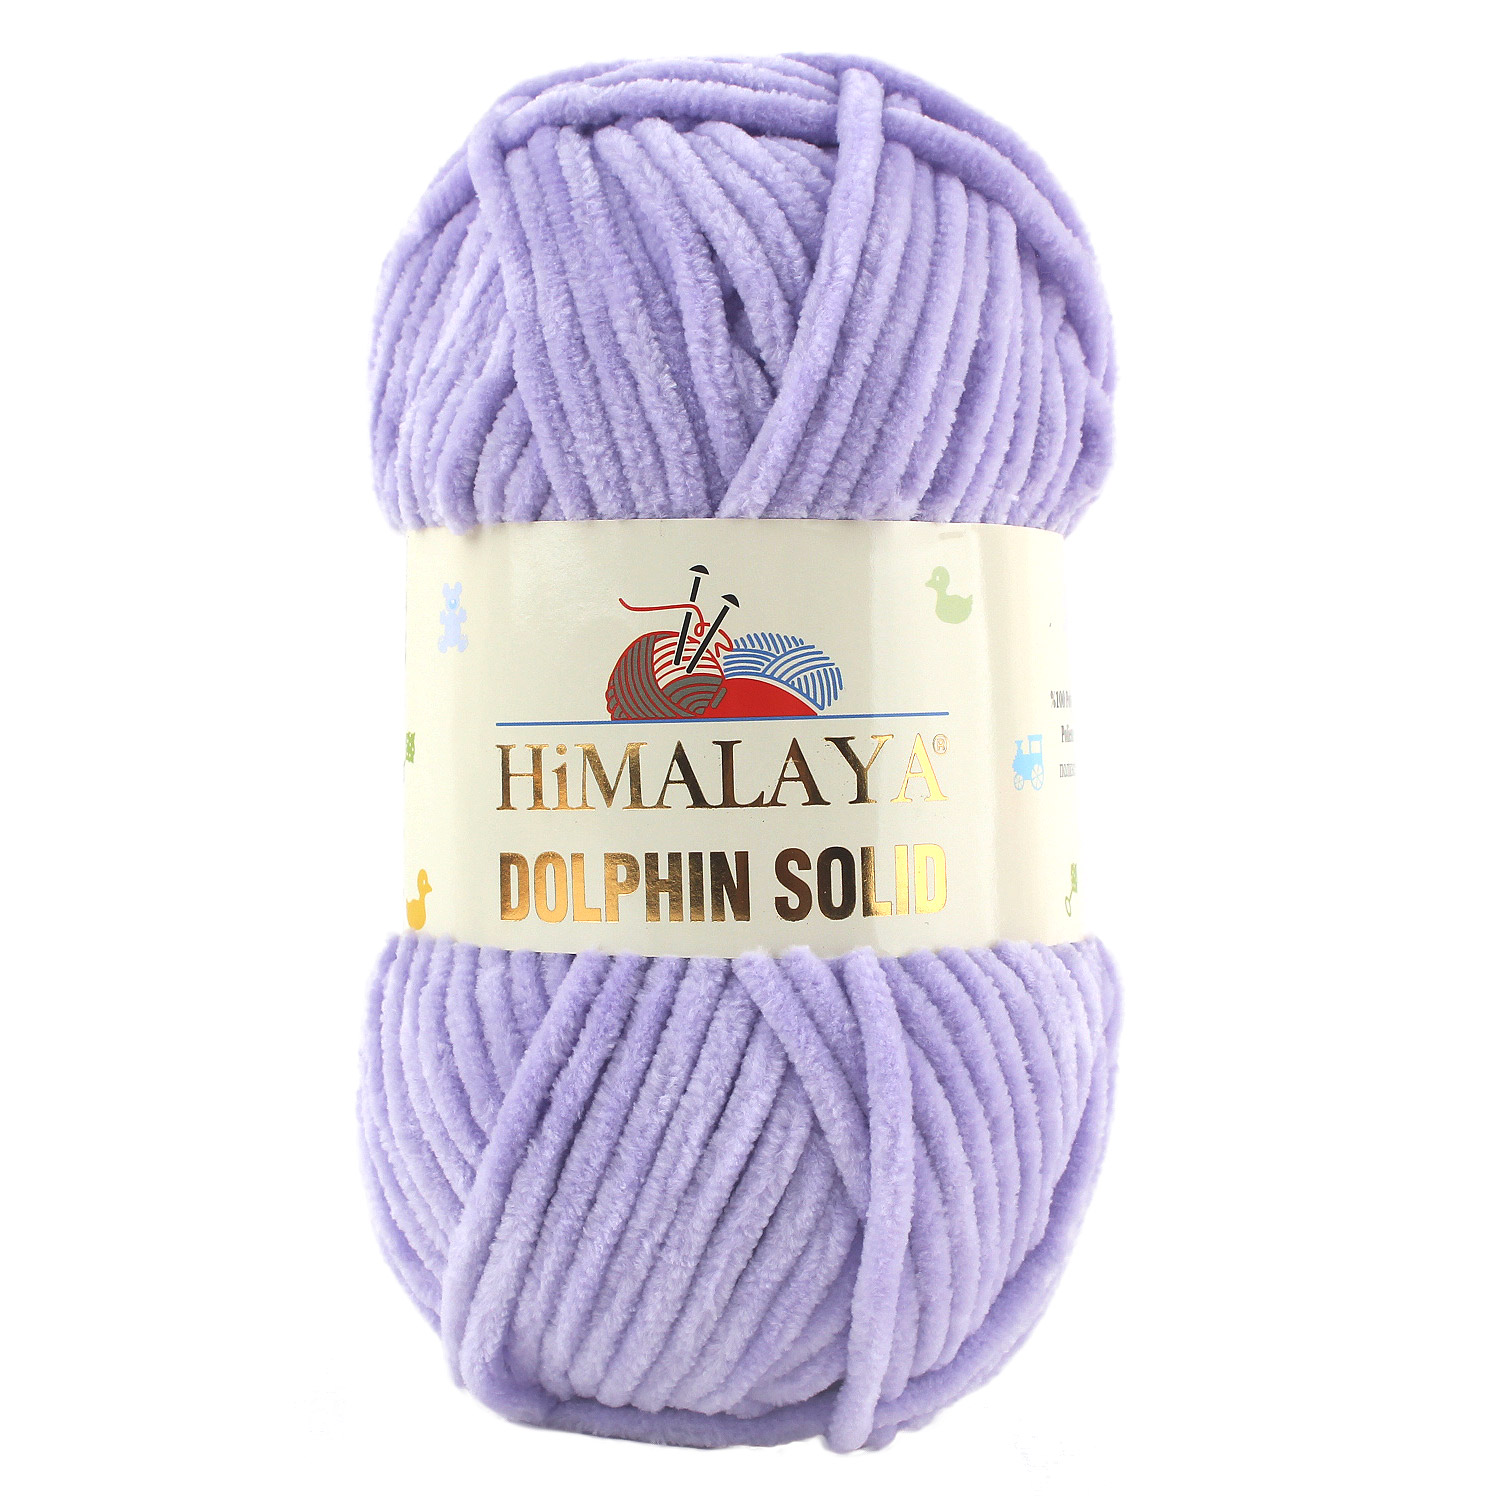 Himalaya Dolphin Baby 100gr 120mt- chenille yarn soft yarn for knitting  crochet